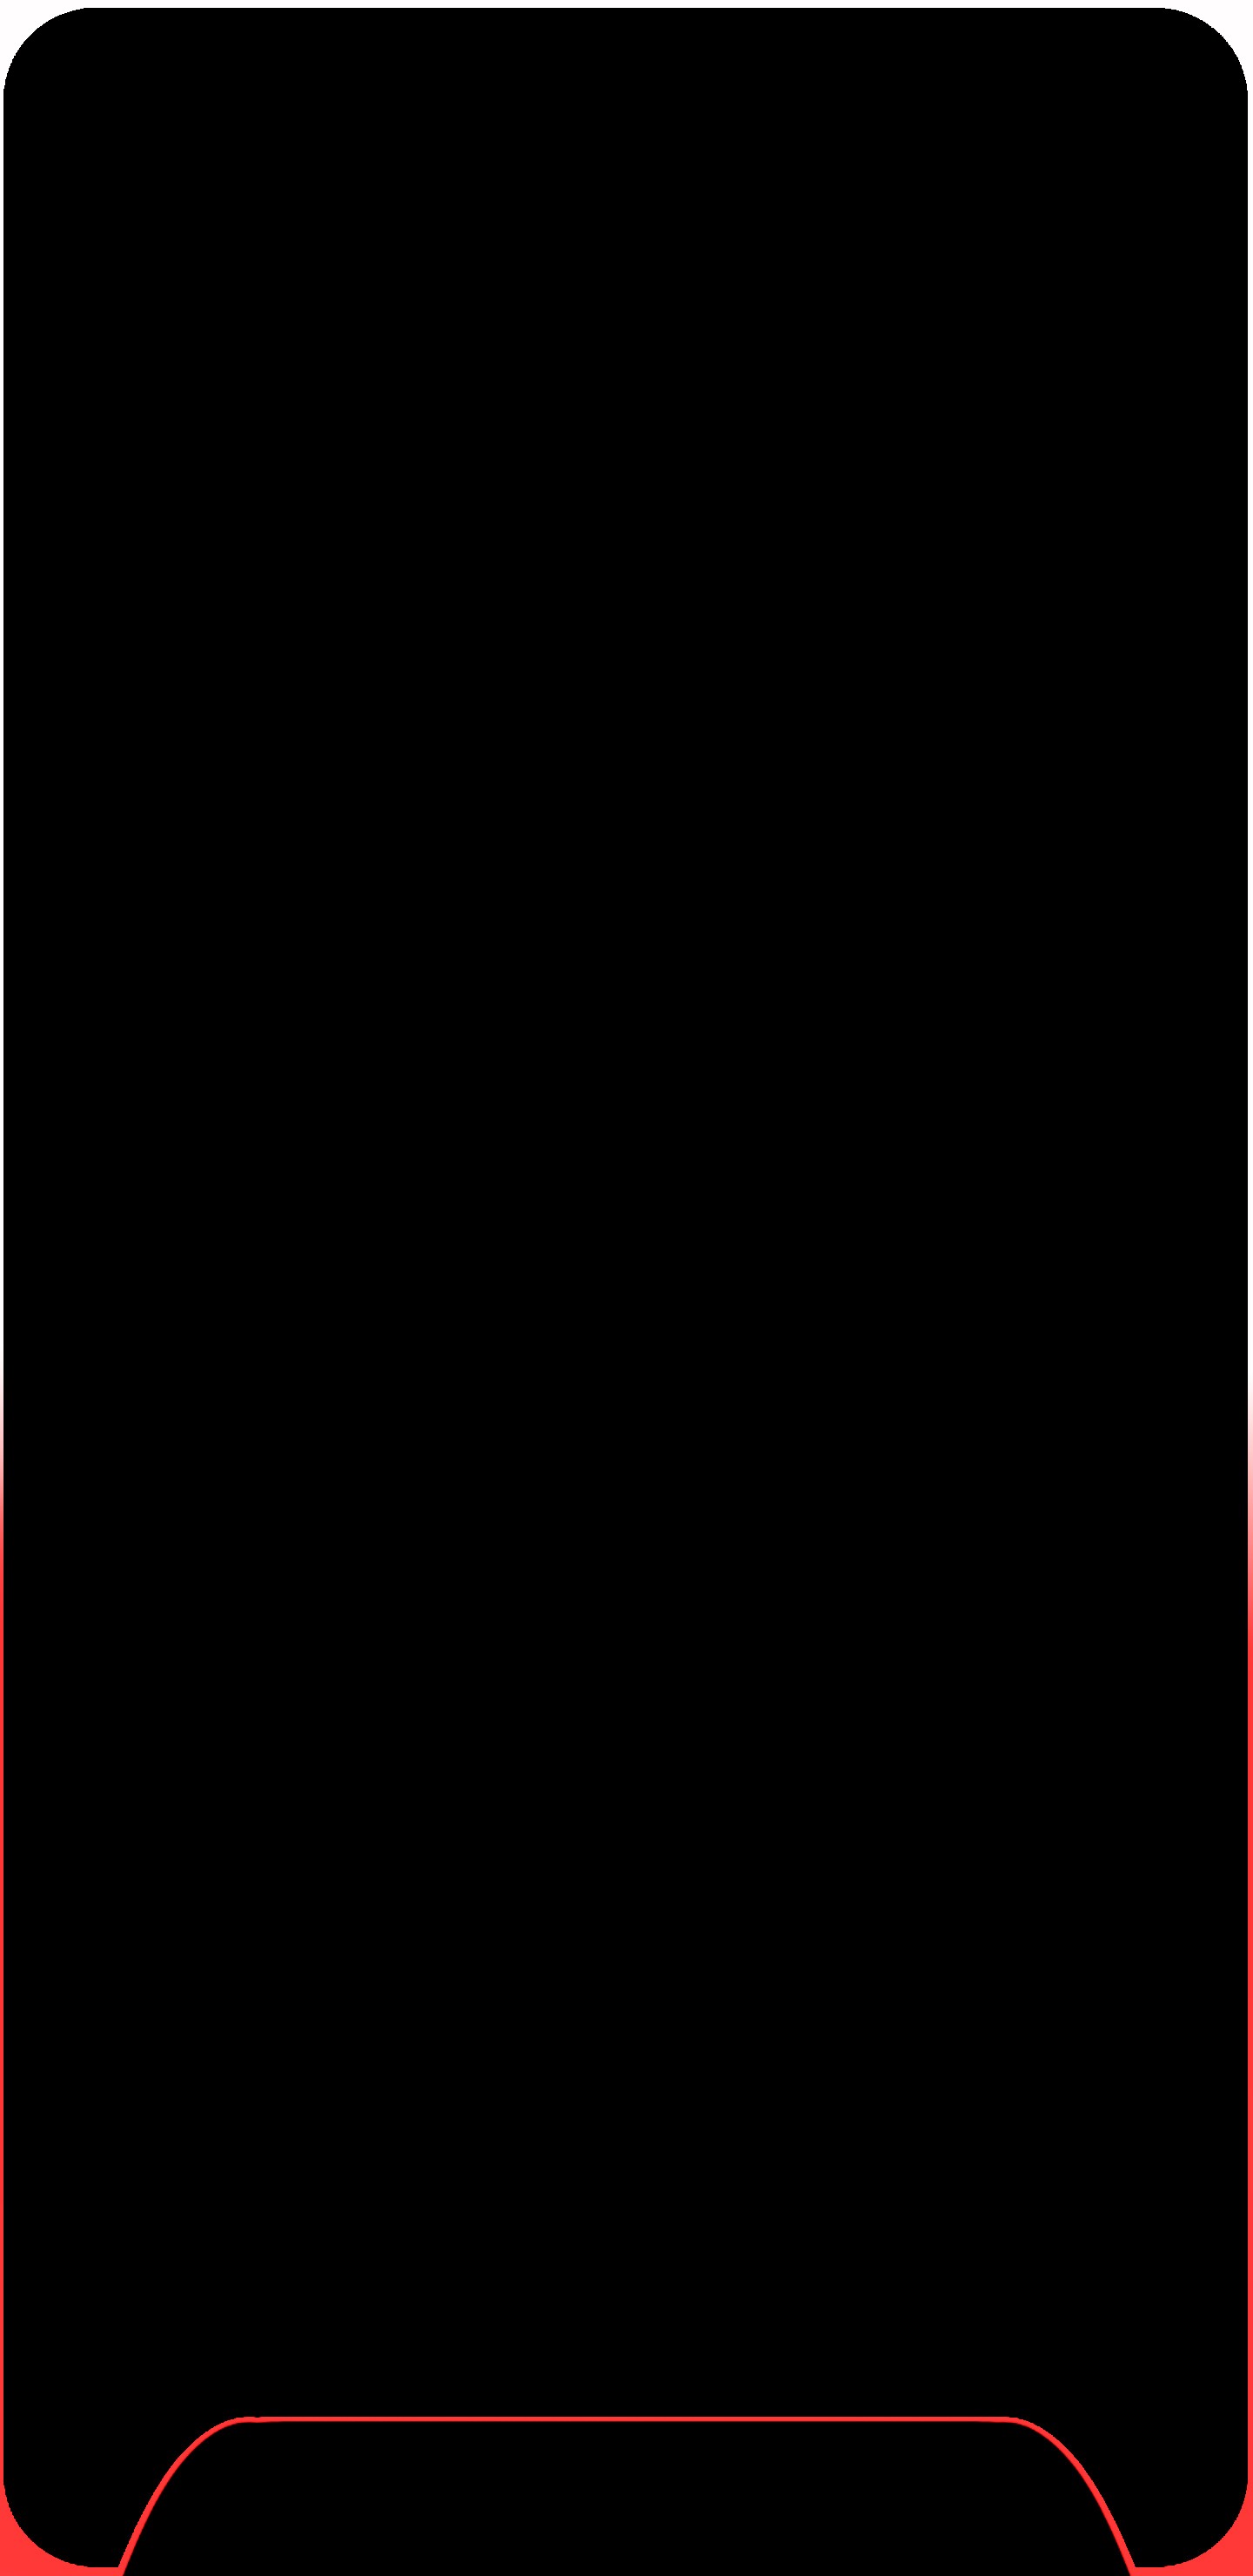 galaxy s8 fondo de pantalla,negro,rojo,texto,marrón,oscuridad